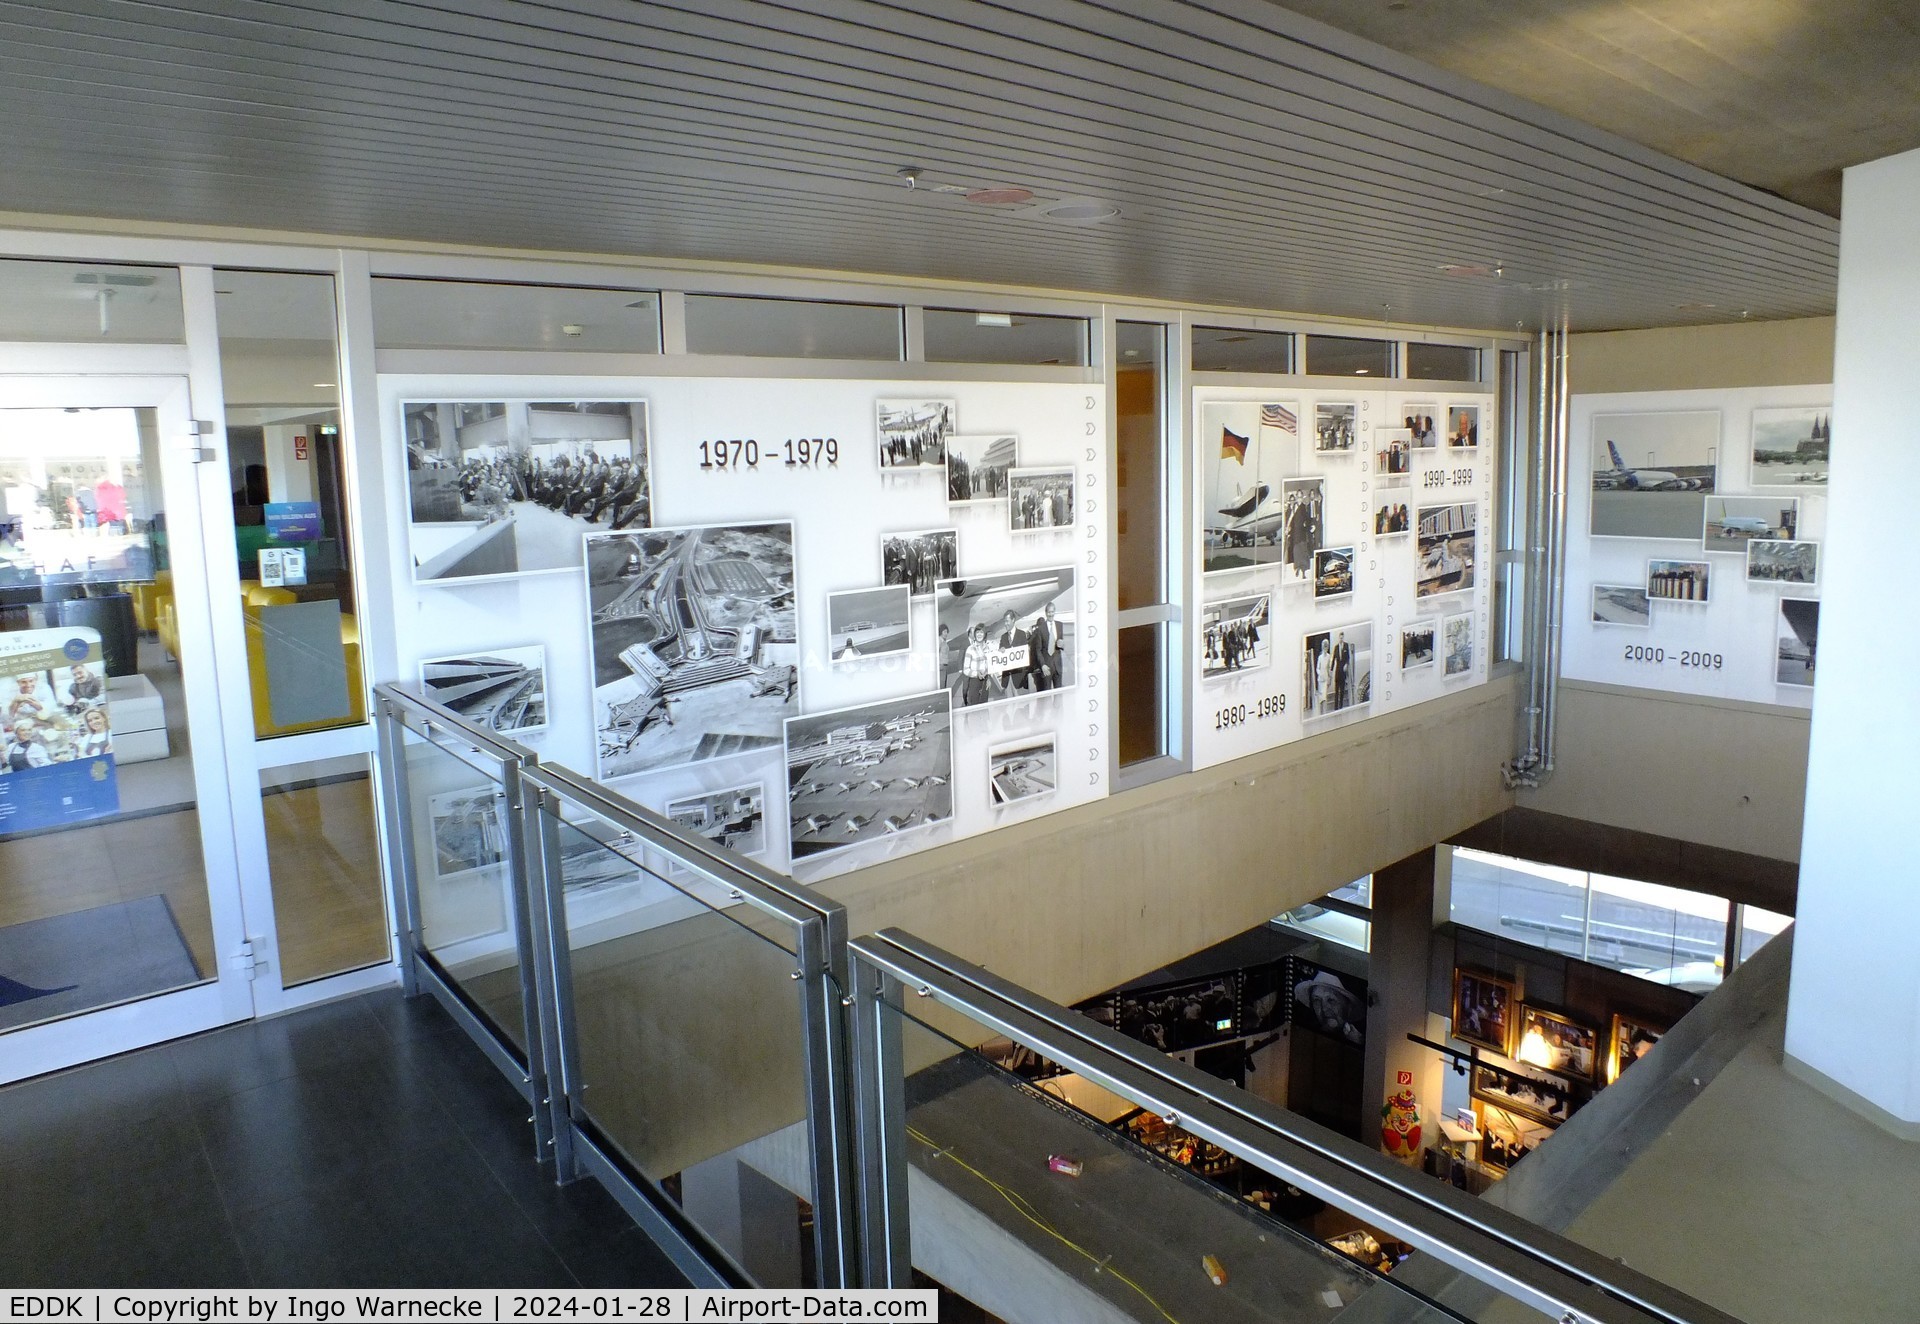 Cologne Bonn Airport, Cologne/Bonn Germany (EDDK) - photo exhibition on airport history at the visitors terrace of terminal 1 at Köln/Bonn airport